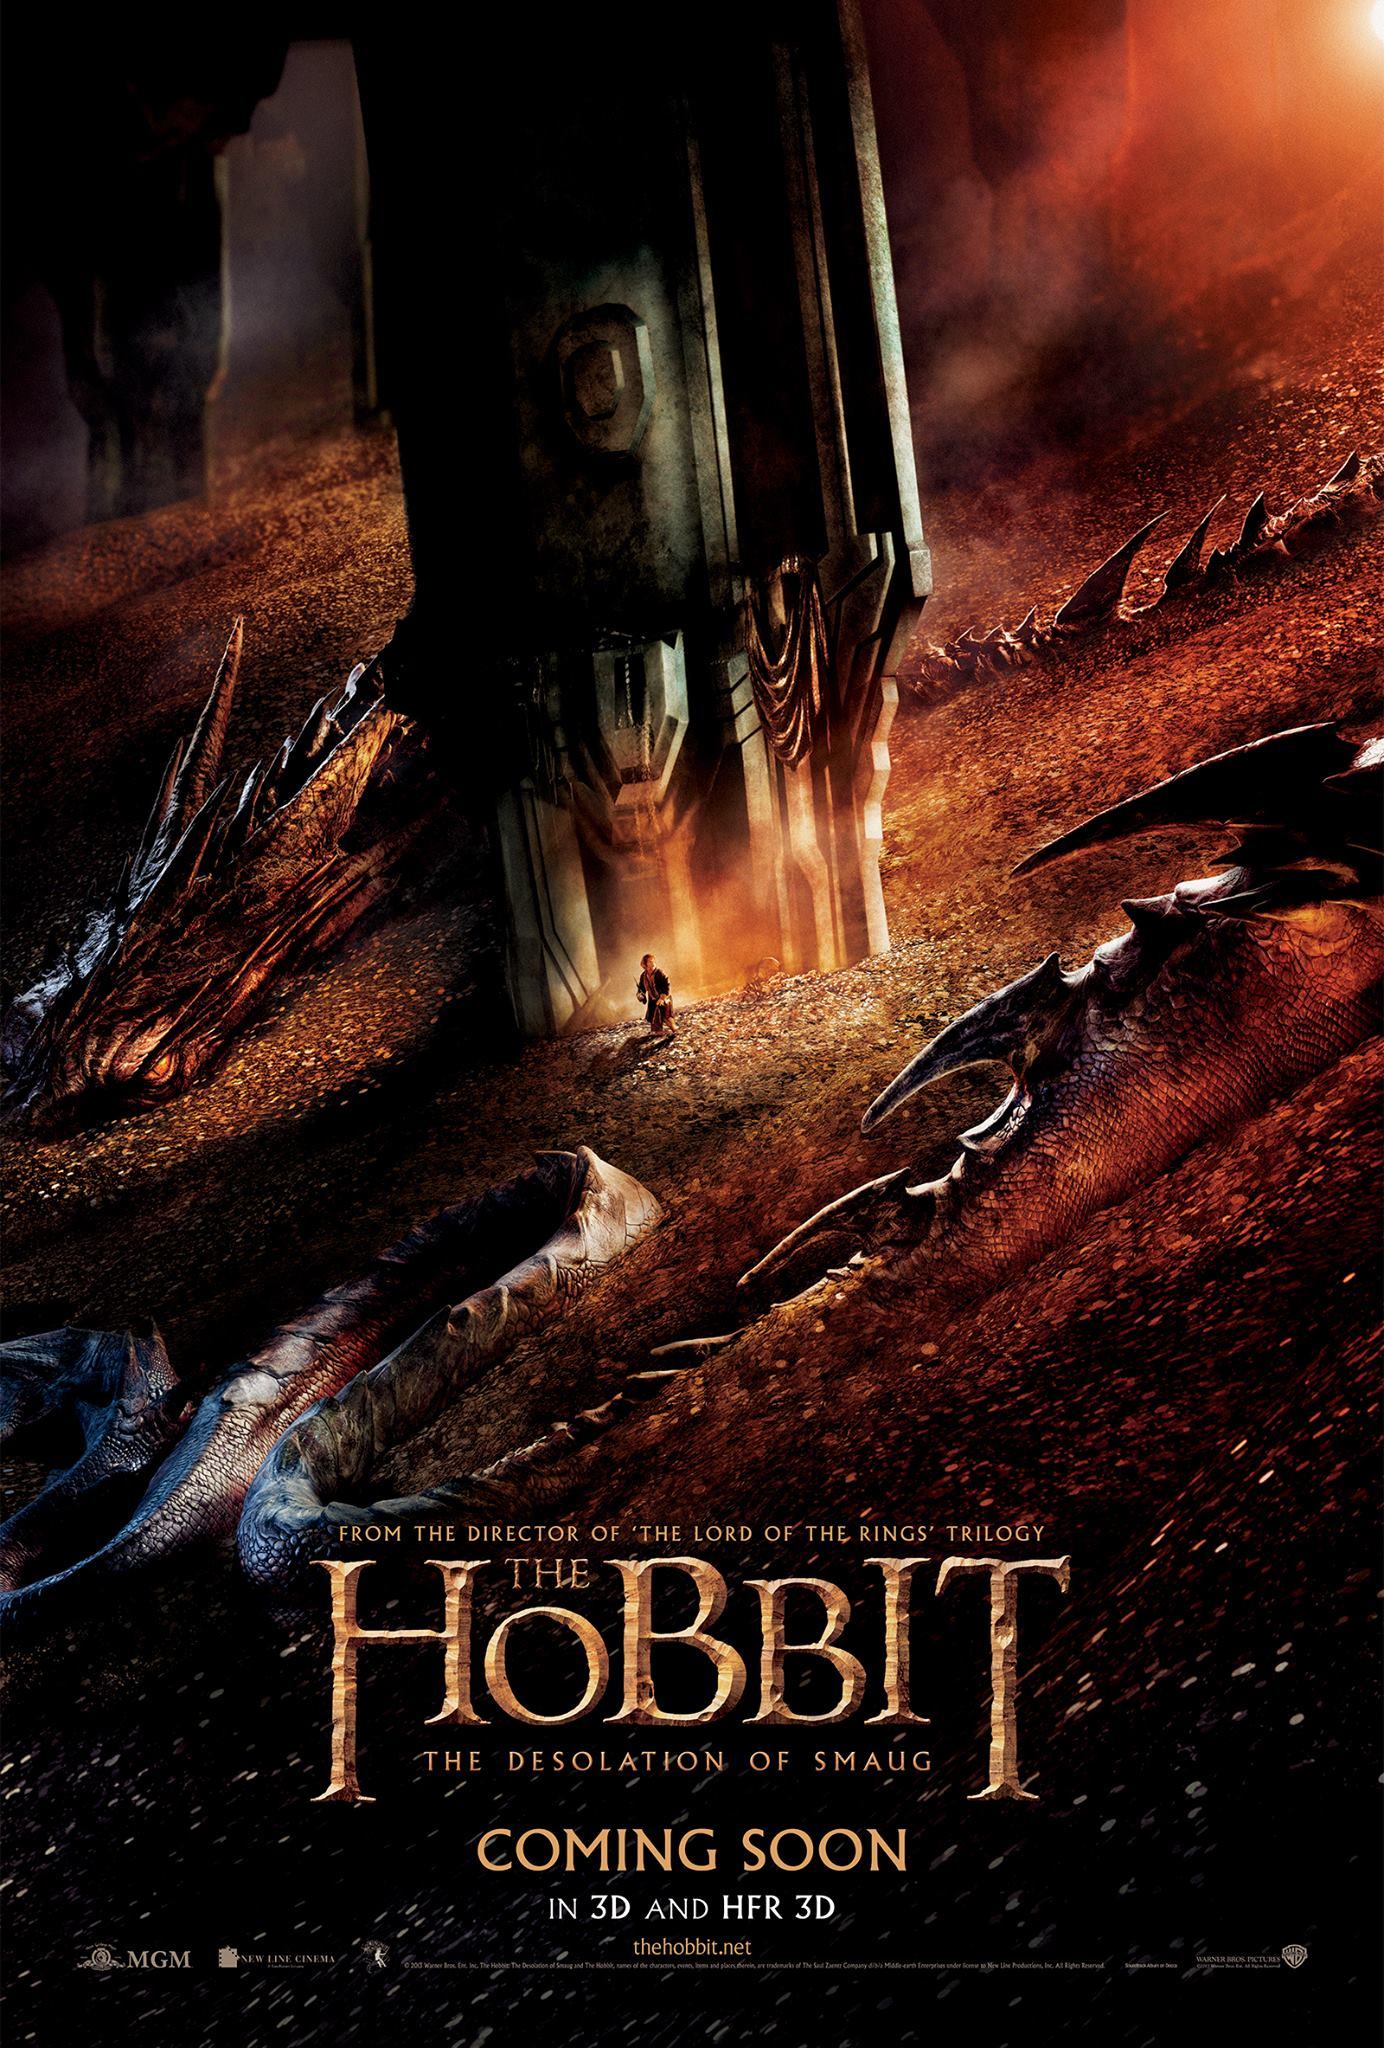 Постер фильма Хоббит: Пустошь Смауга | Hobbit: The Desolation of Smaug